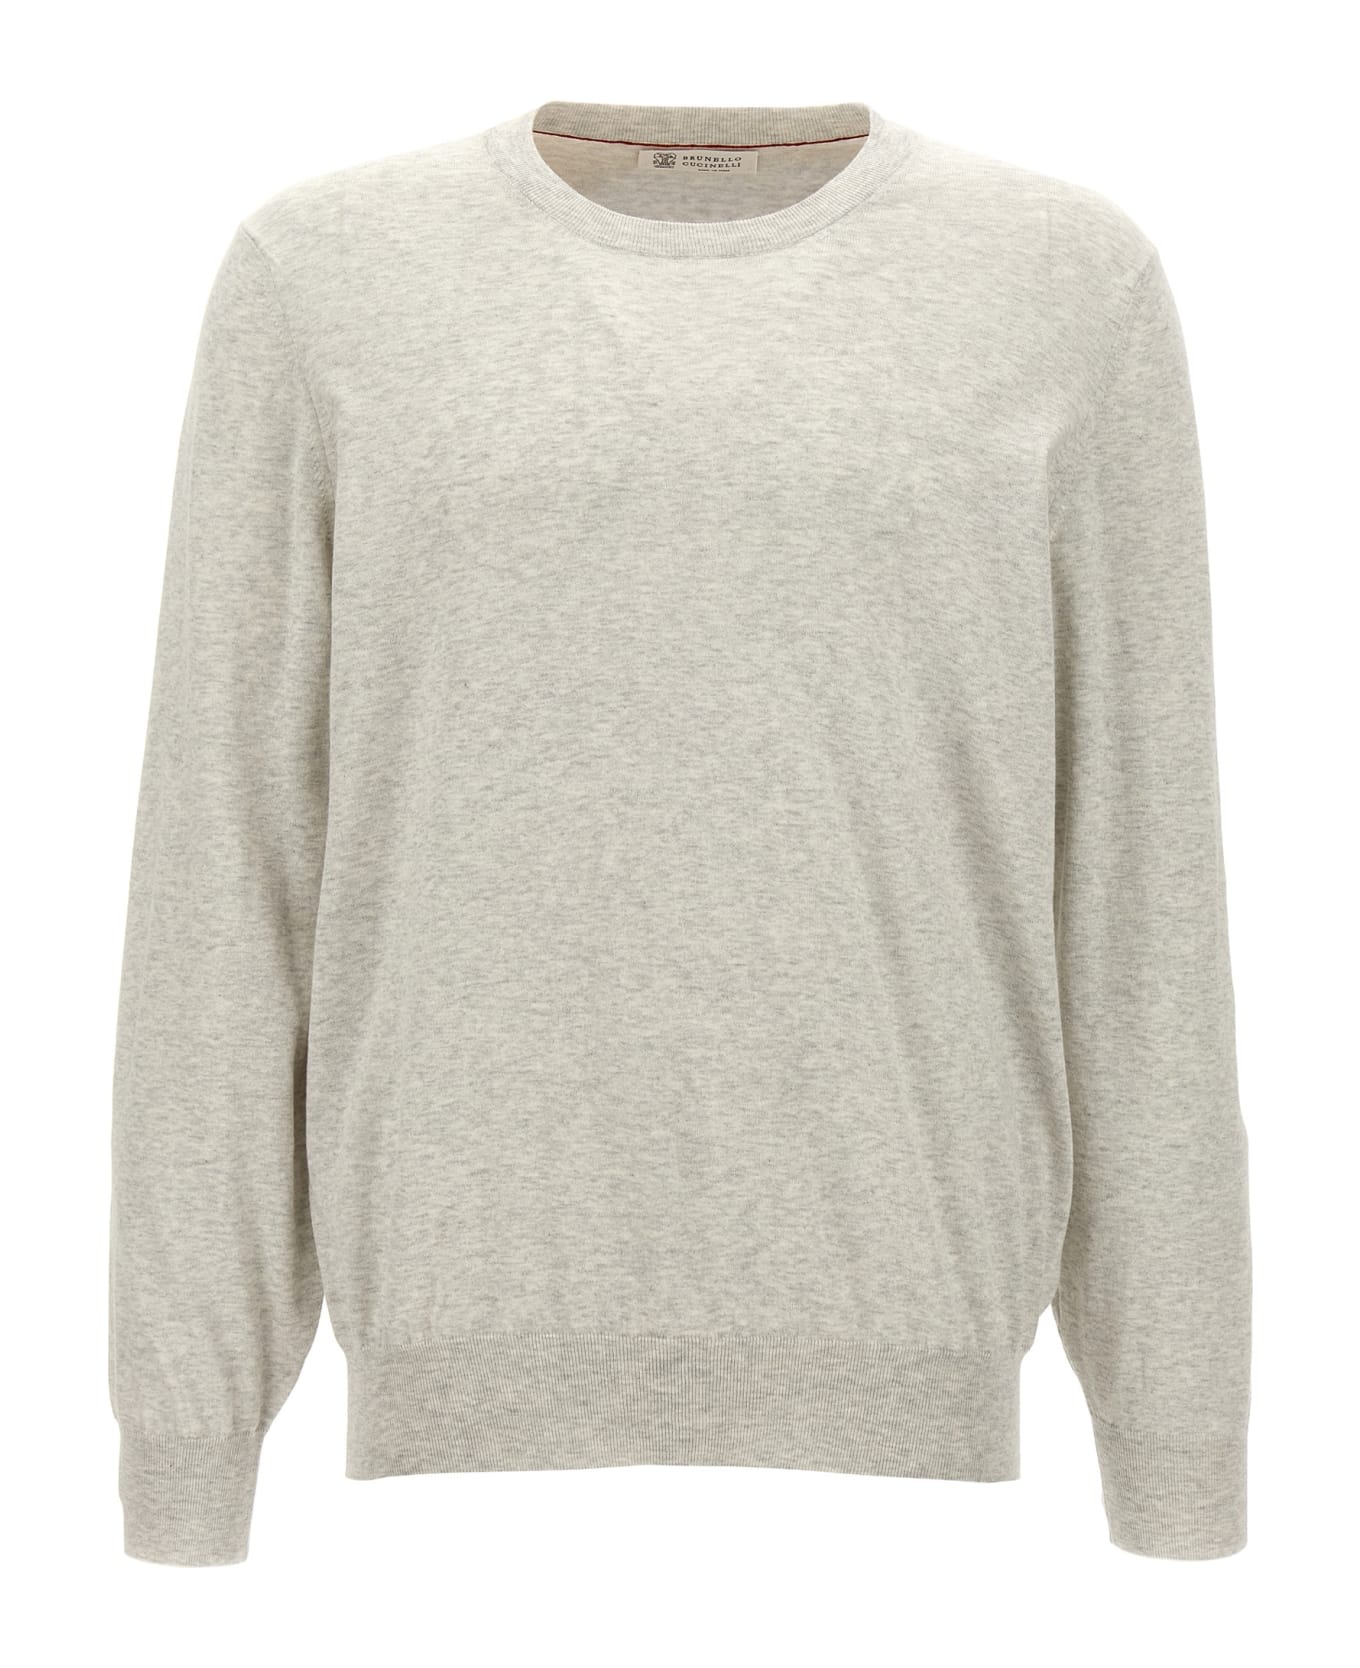 Brunello Cucinelli Crewneck Sweater - Gray